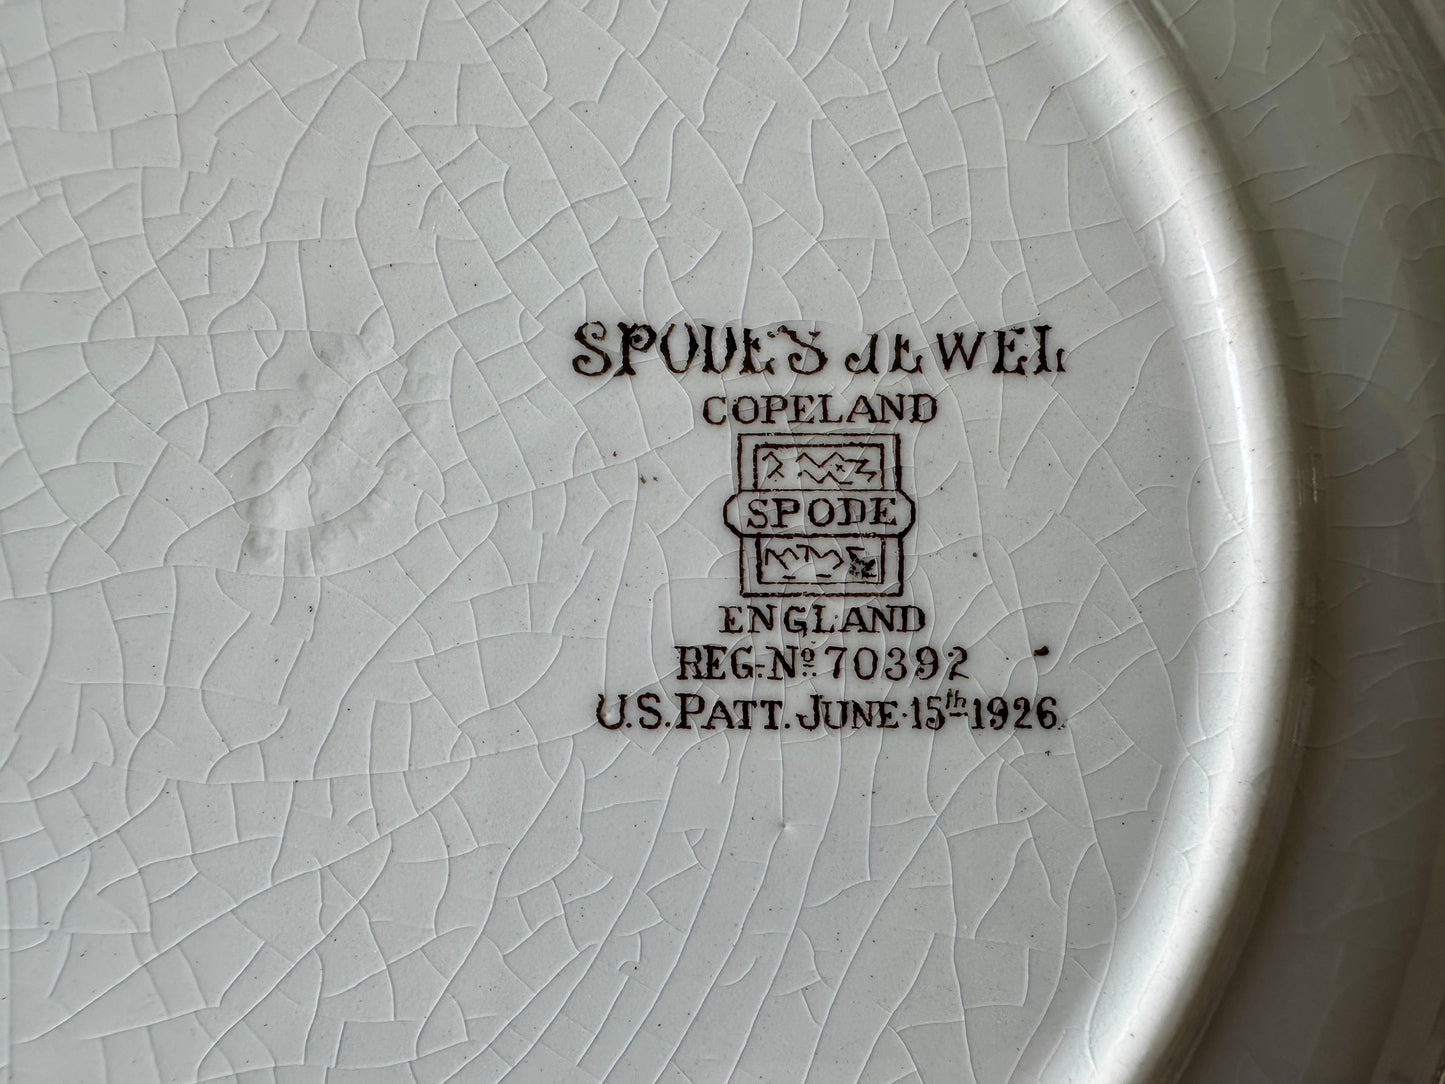 Vintage spode Jewel lunch plates produced between 1966 to 1969 - DharBazaar